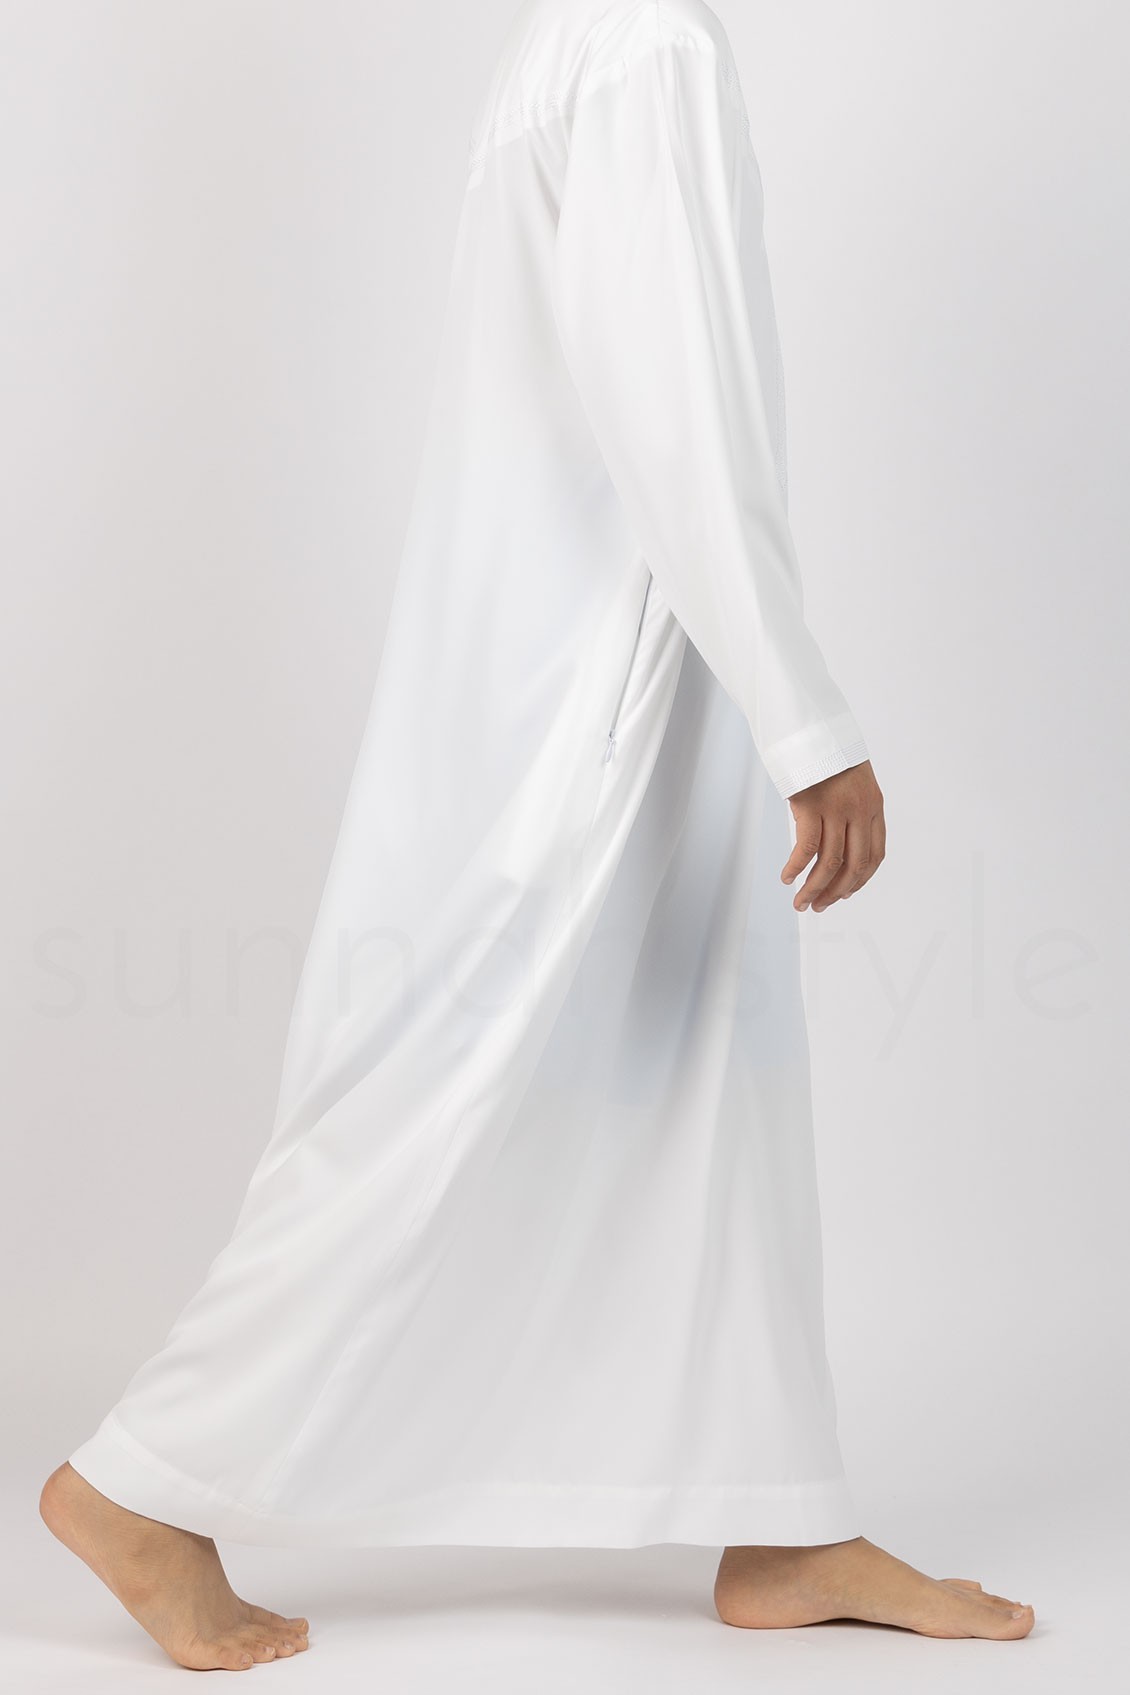 Sunnah Style Boys Omani Embroidered Thobe Child White